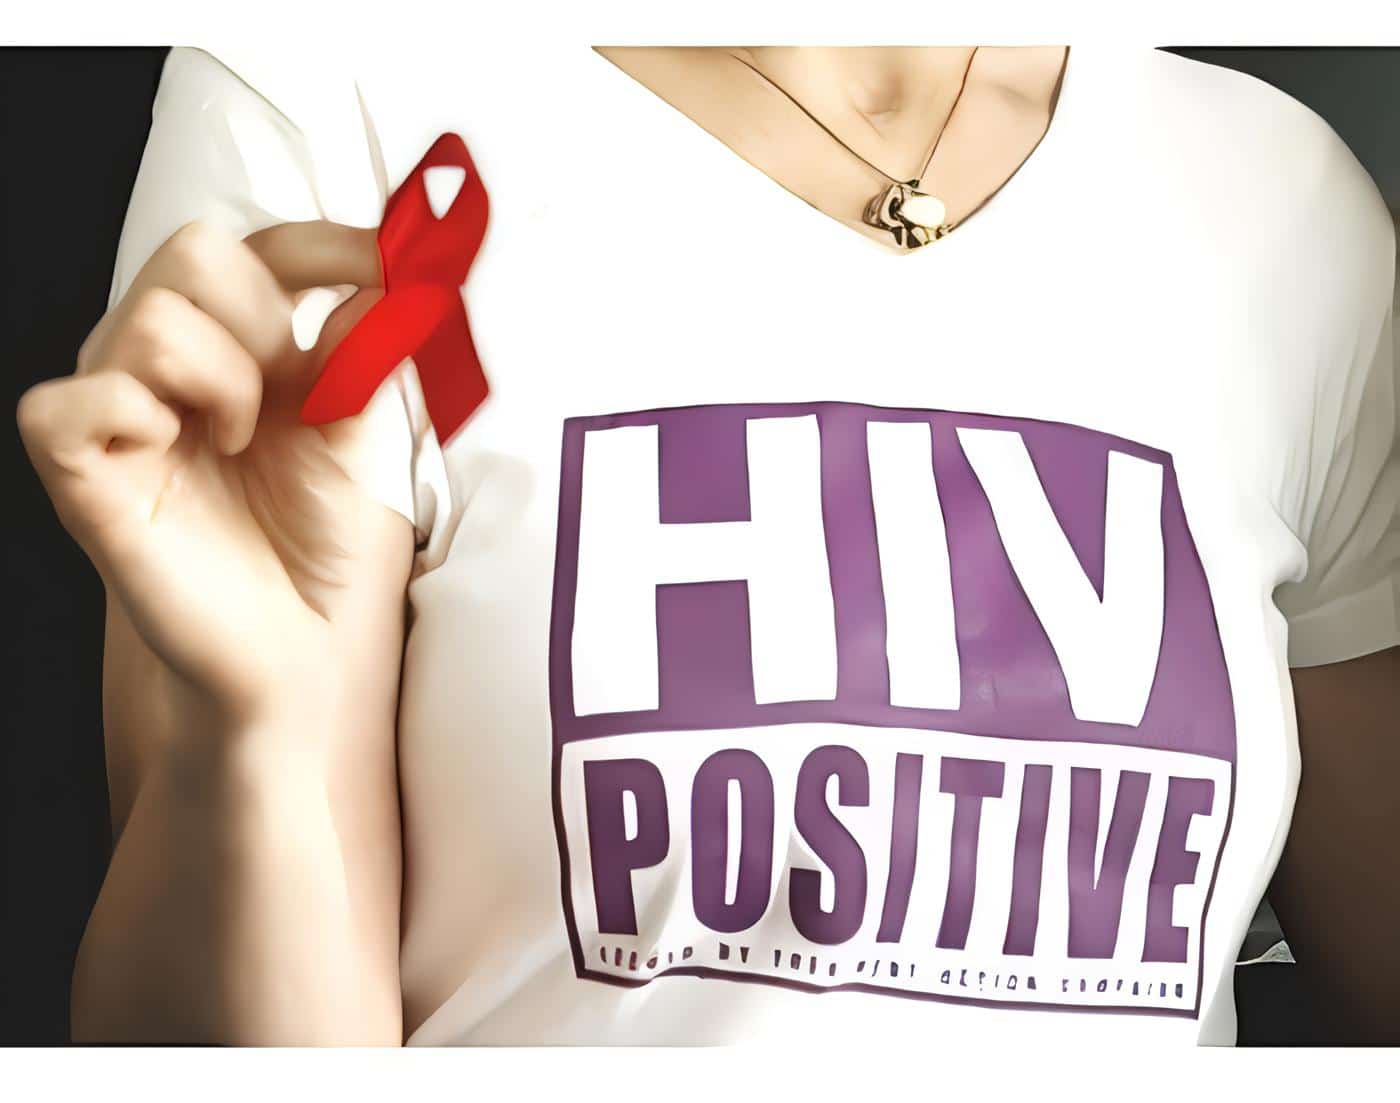 VIH Infecta a Mujeres